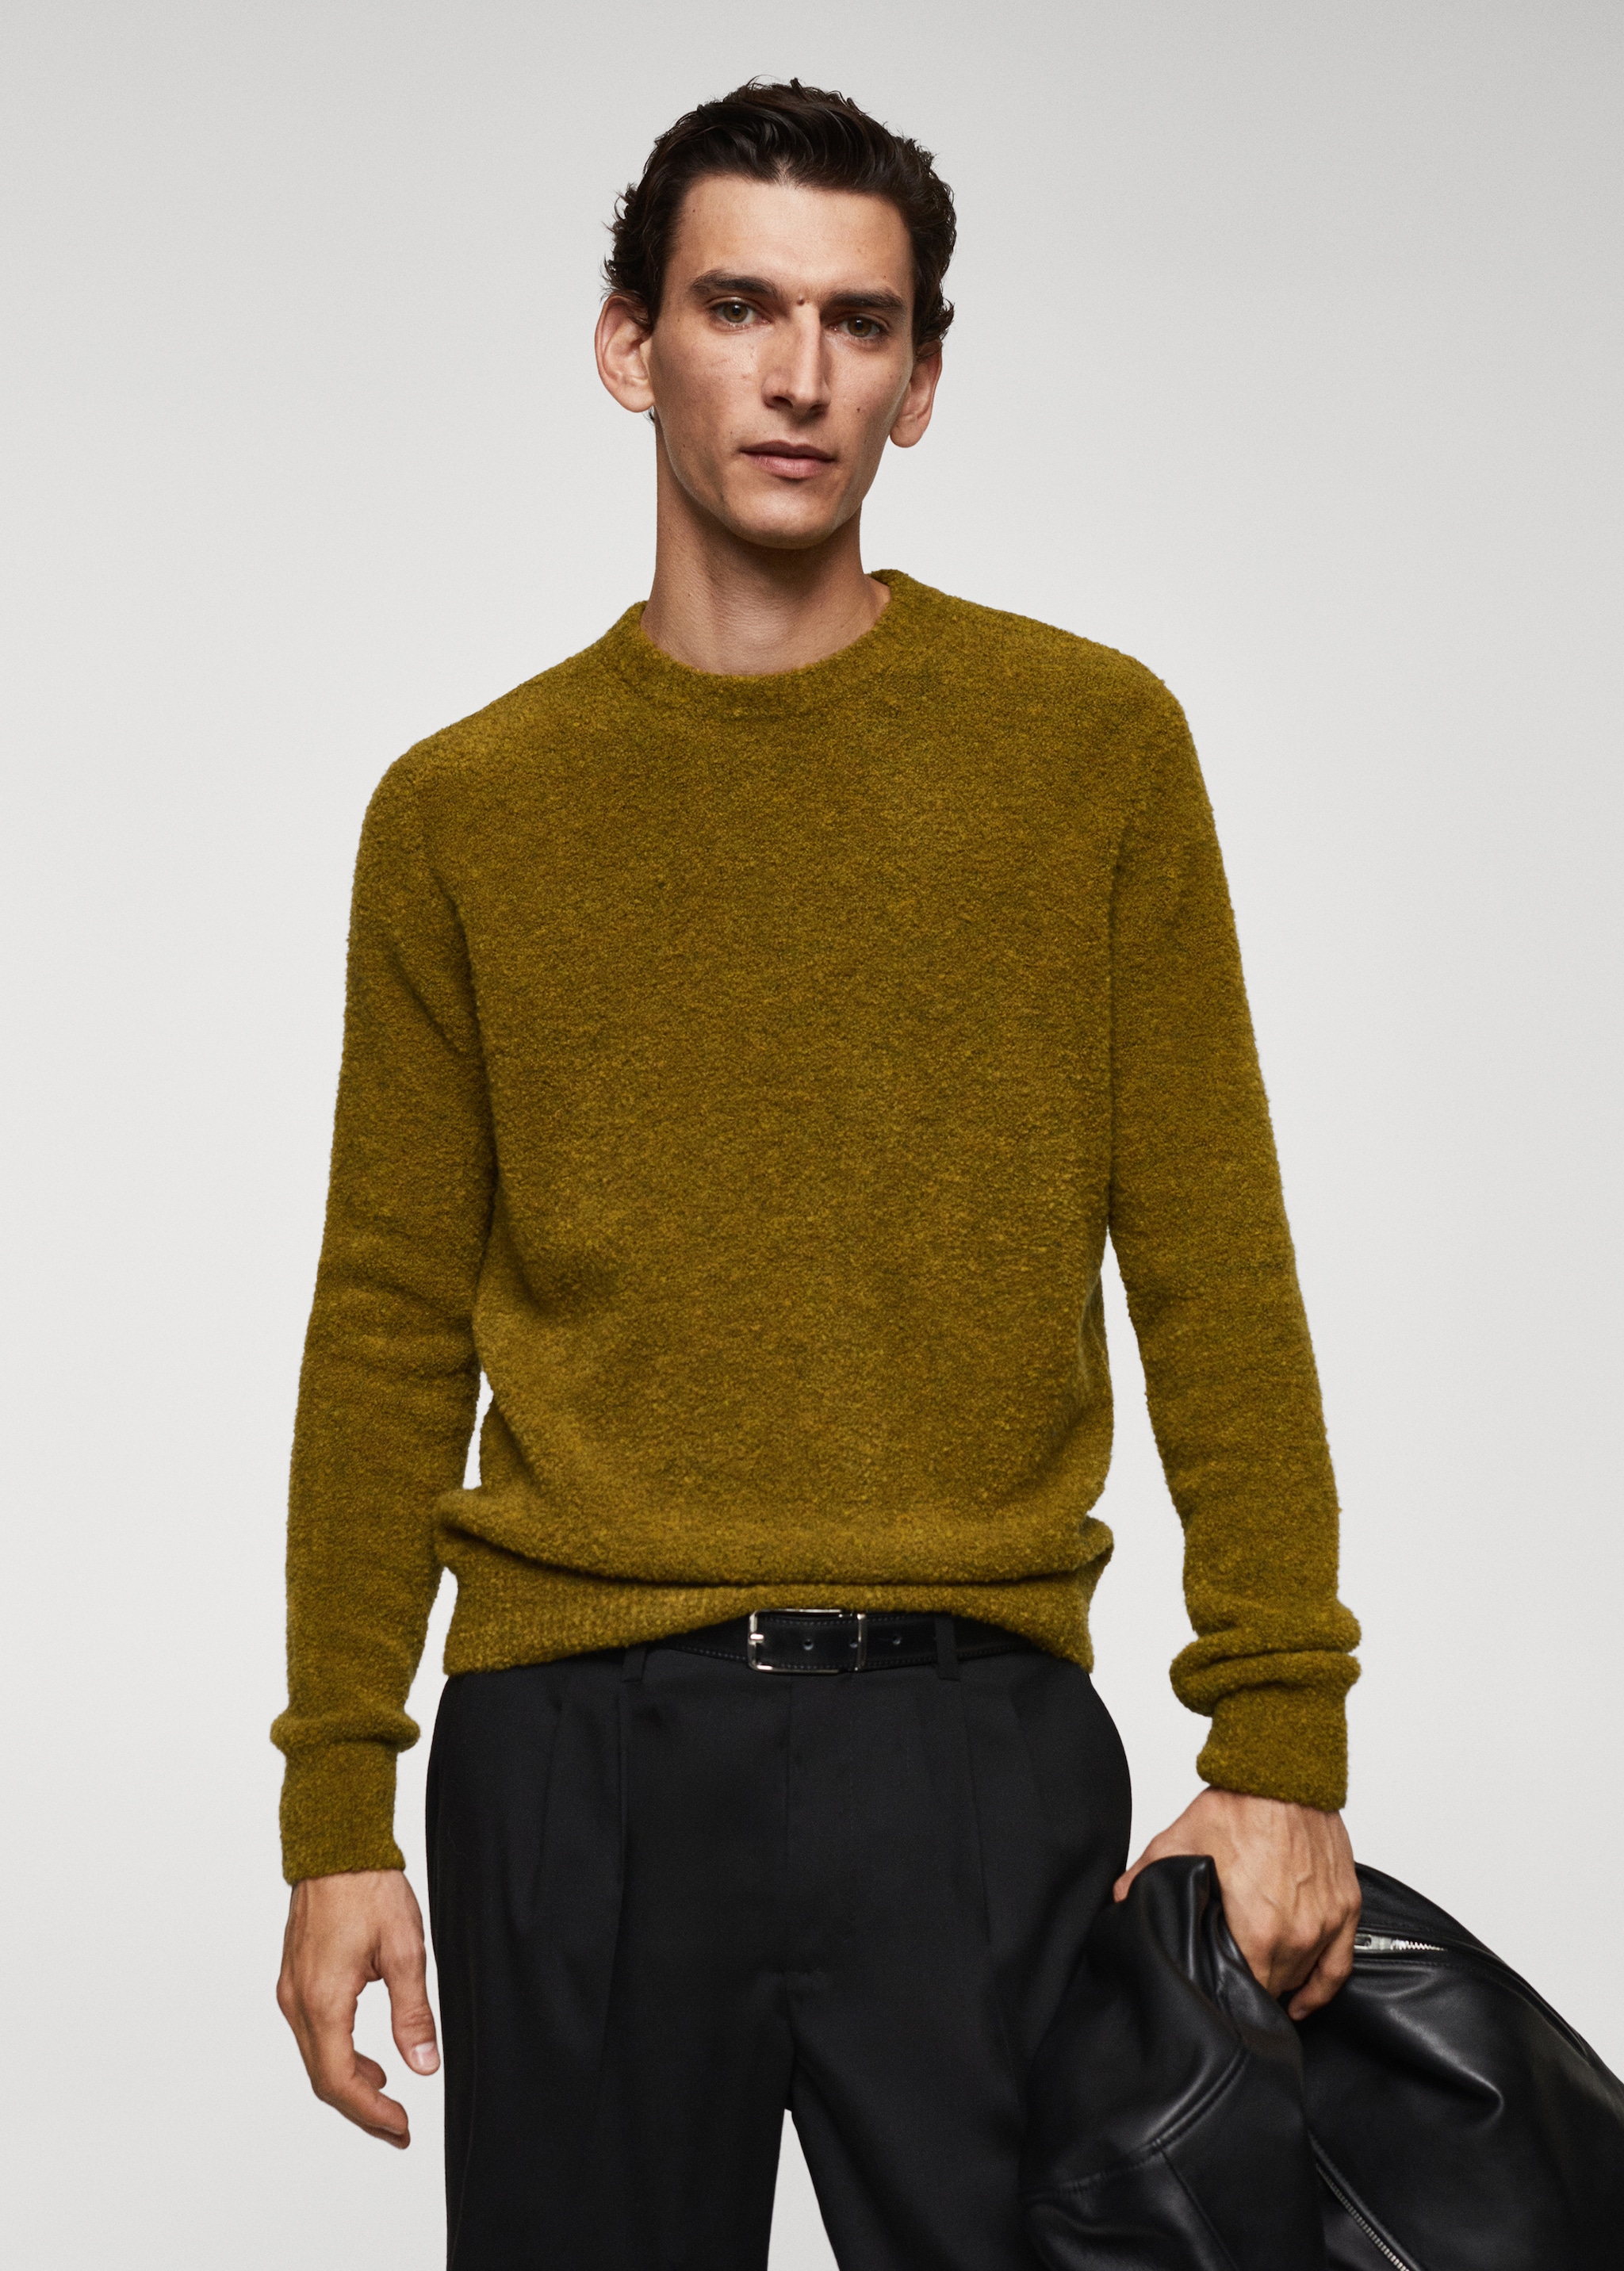 Bouclé knit sweater - Medium plane